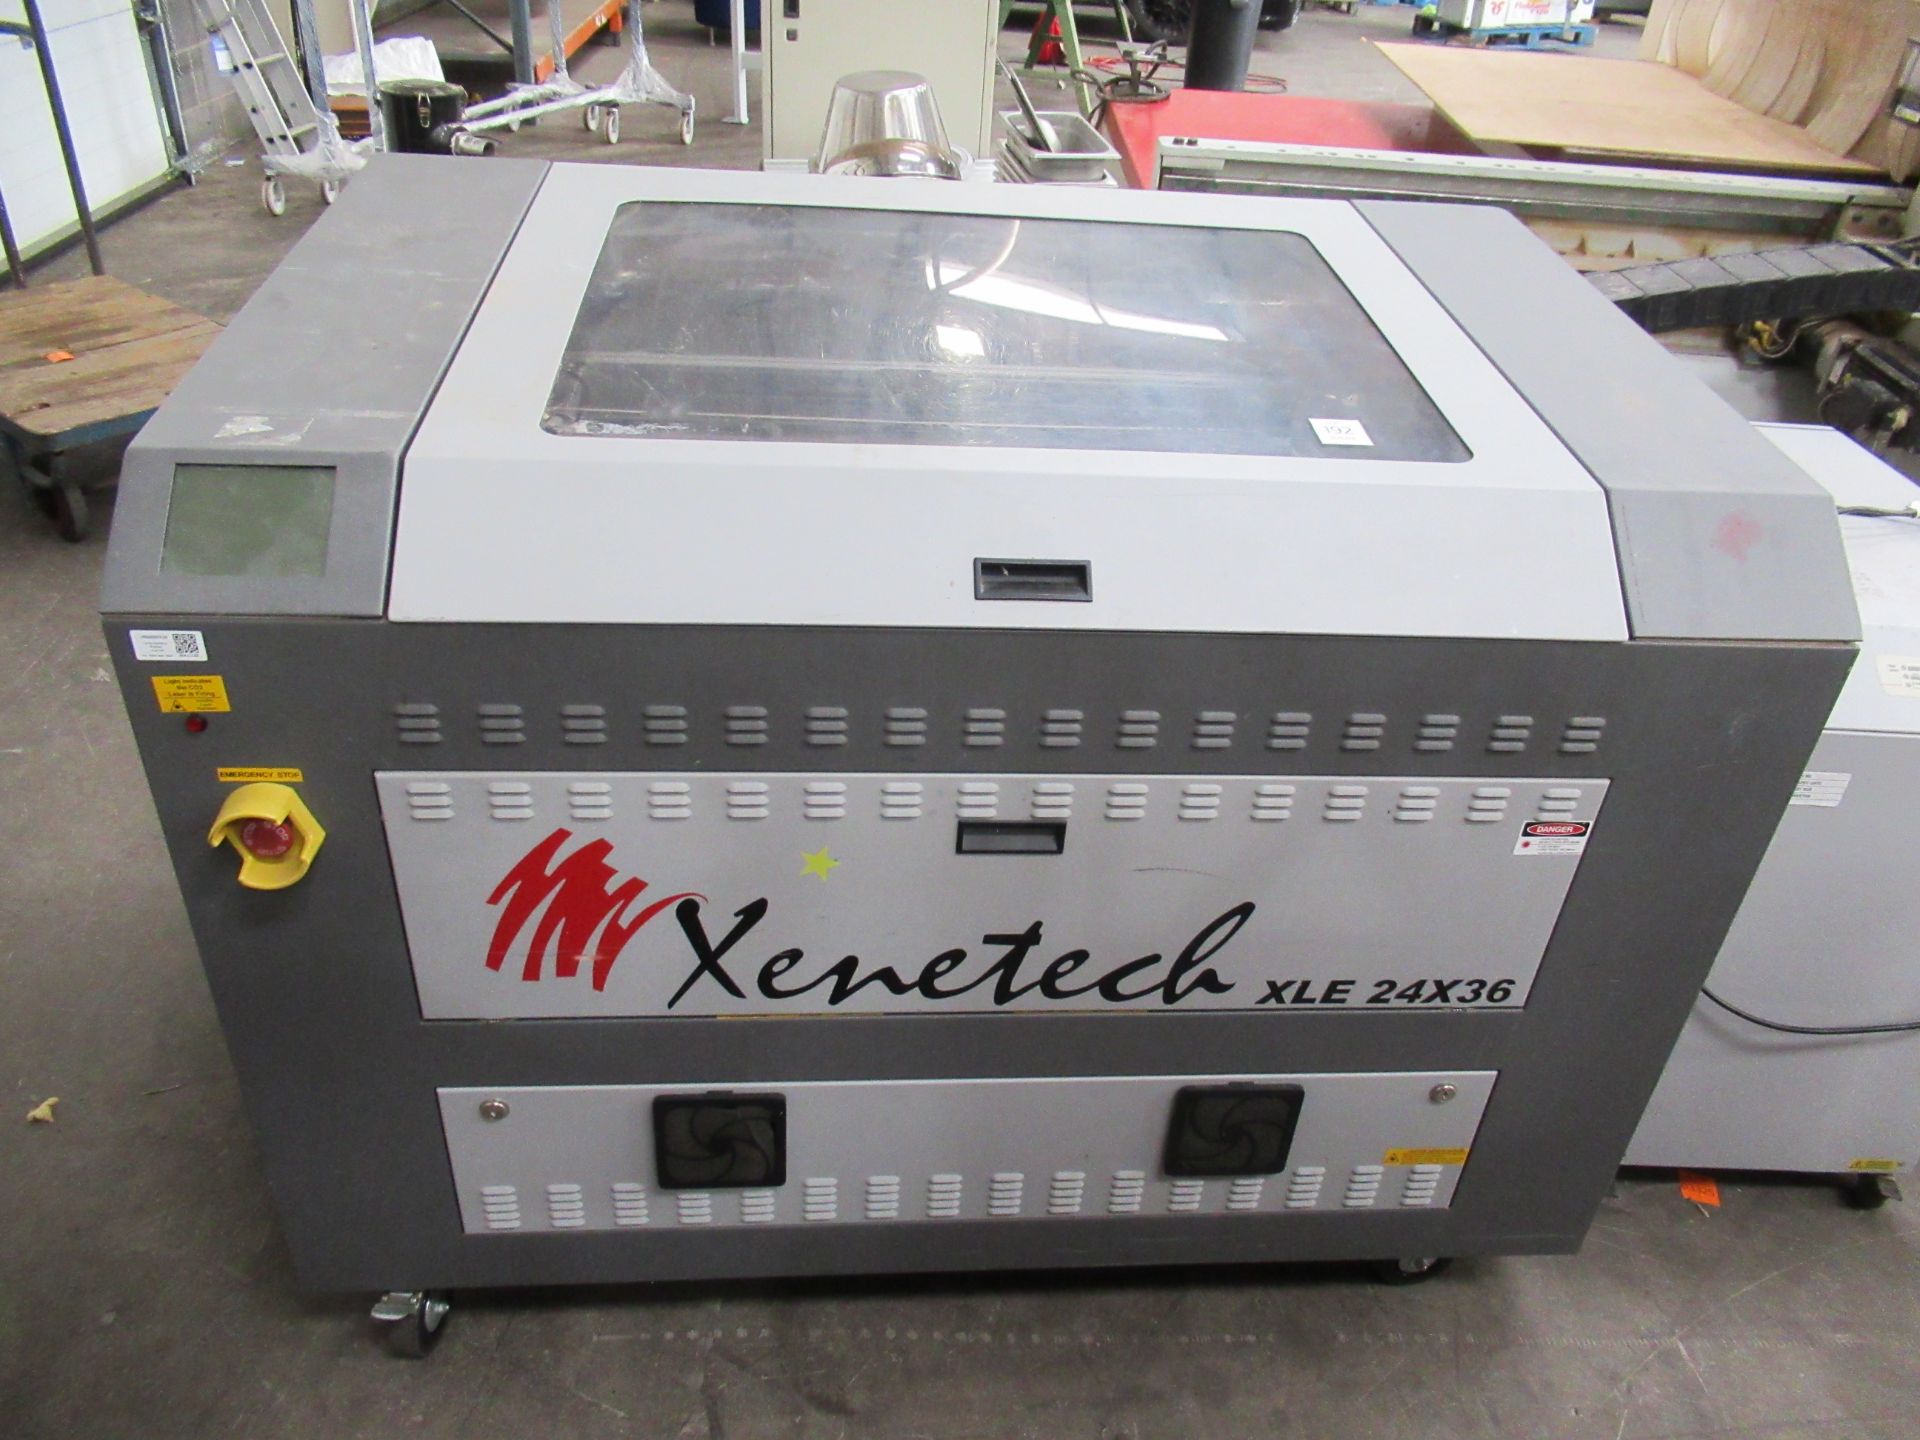 An Xenetech XLE 24 x36 Lazer Engraver come with a Bofa advantage filter unit - Image 2 of 9